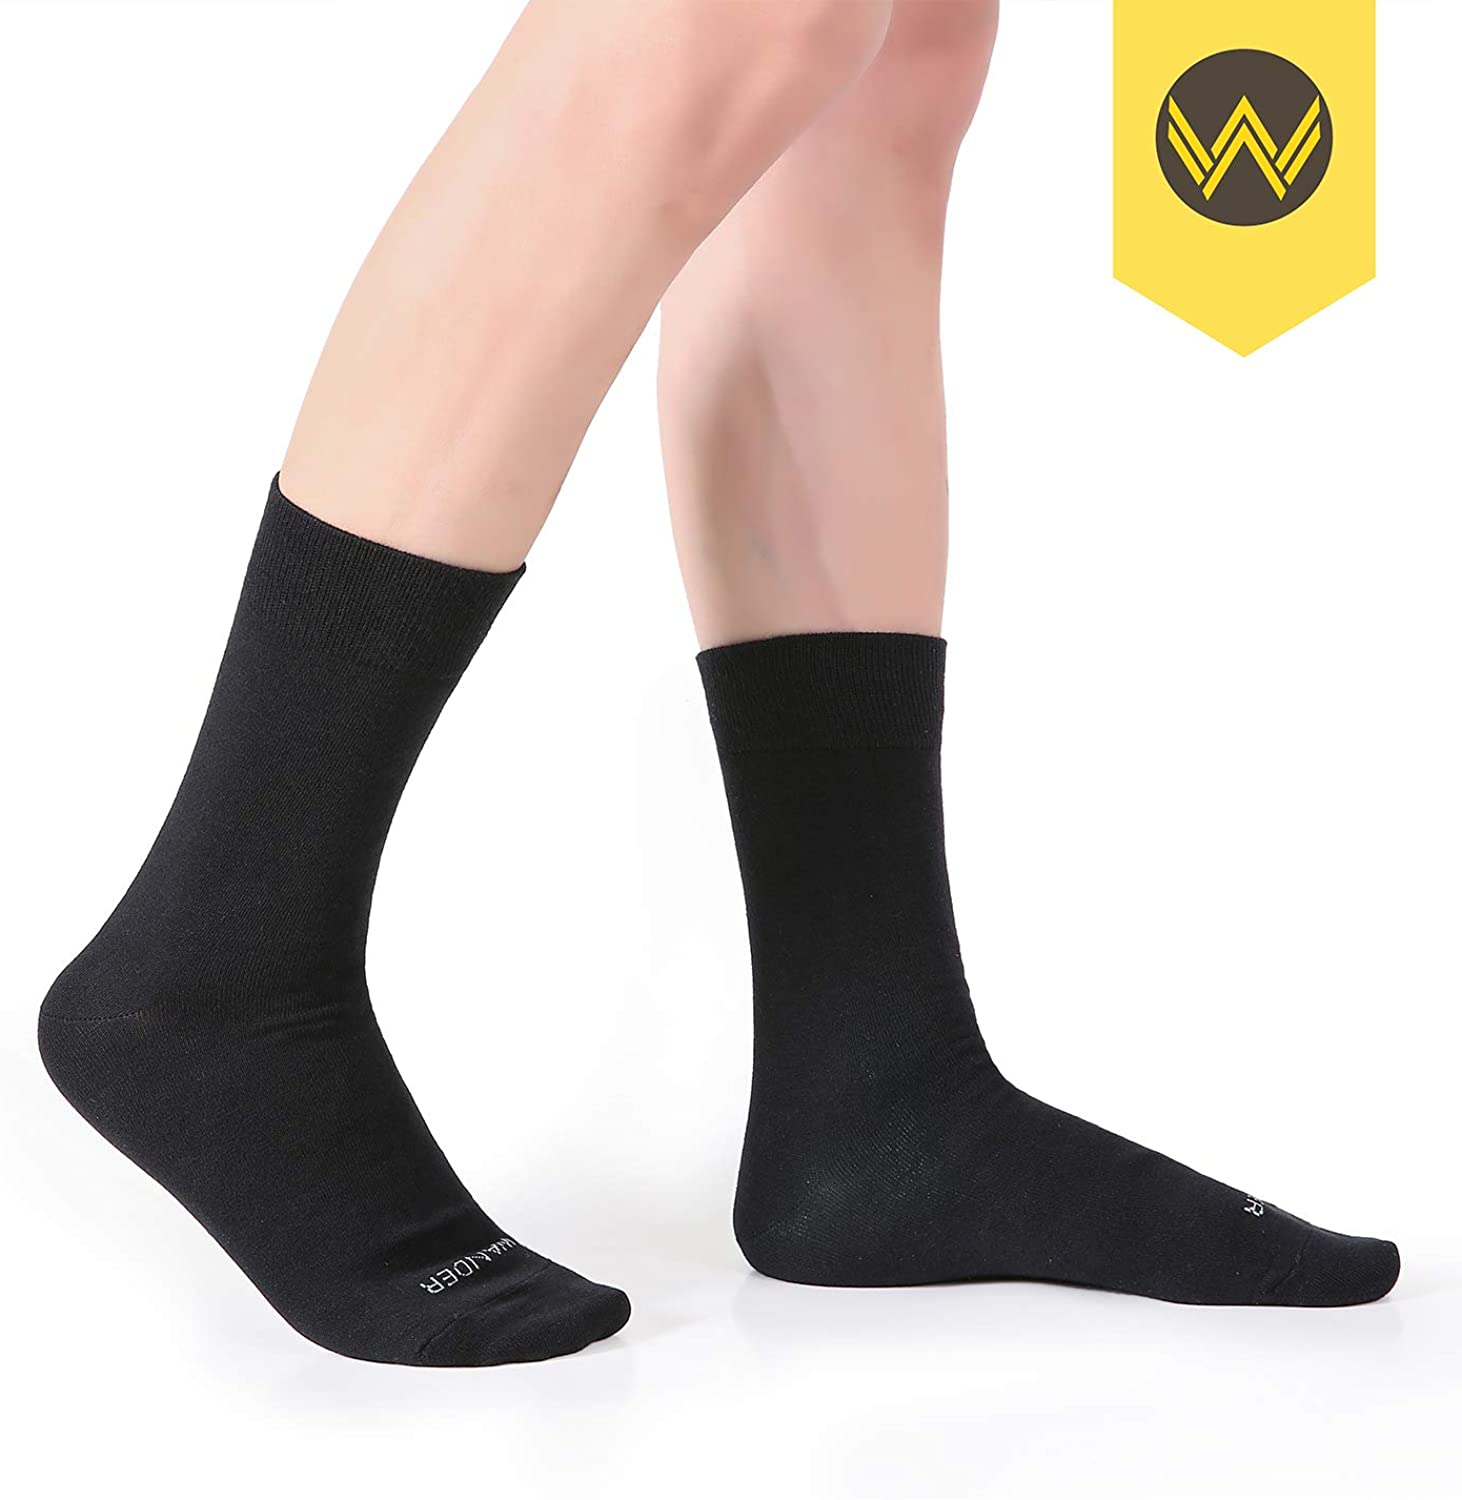 WANDER Men's Dress Socks Cotton Thin Classic lightweight Socks, Black ...